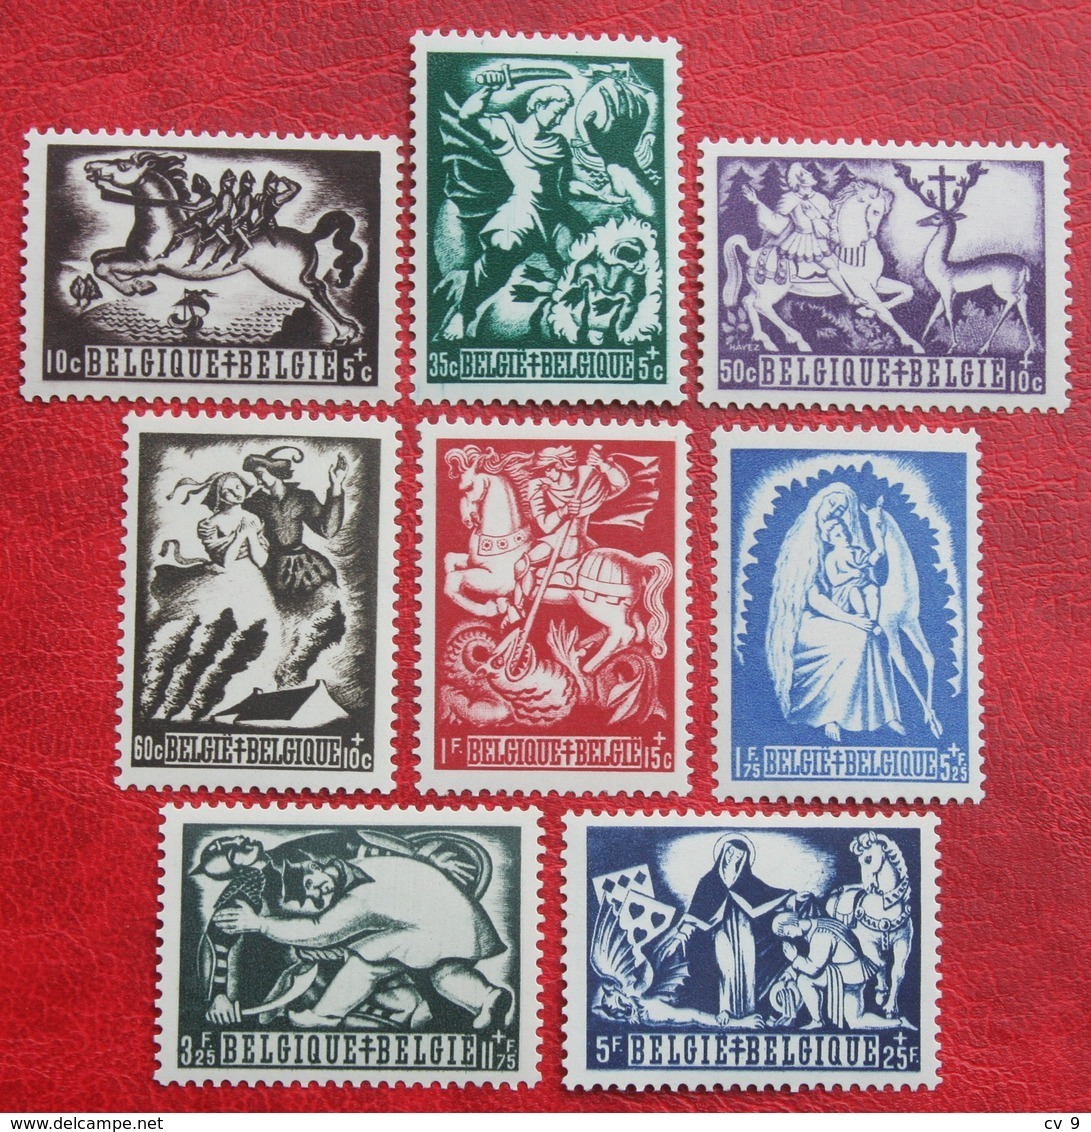 Legende Légendes Belges Tuberculose Zegels Complete Set 1944 OBP 653-660 (Mi 673-680) POSTFRIS / MNH ** BELGIE BELGIUM - Unused Stamps